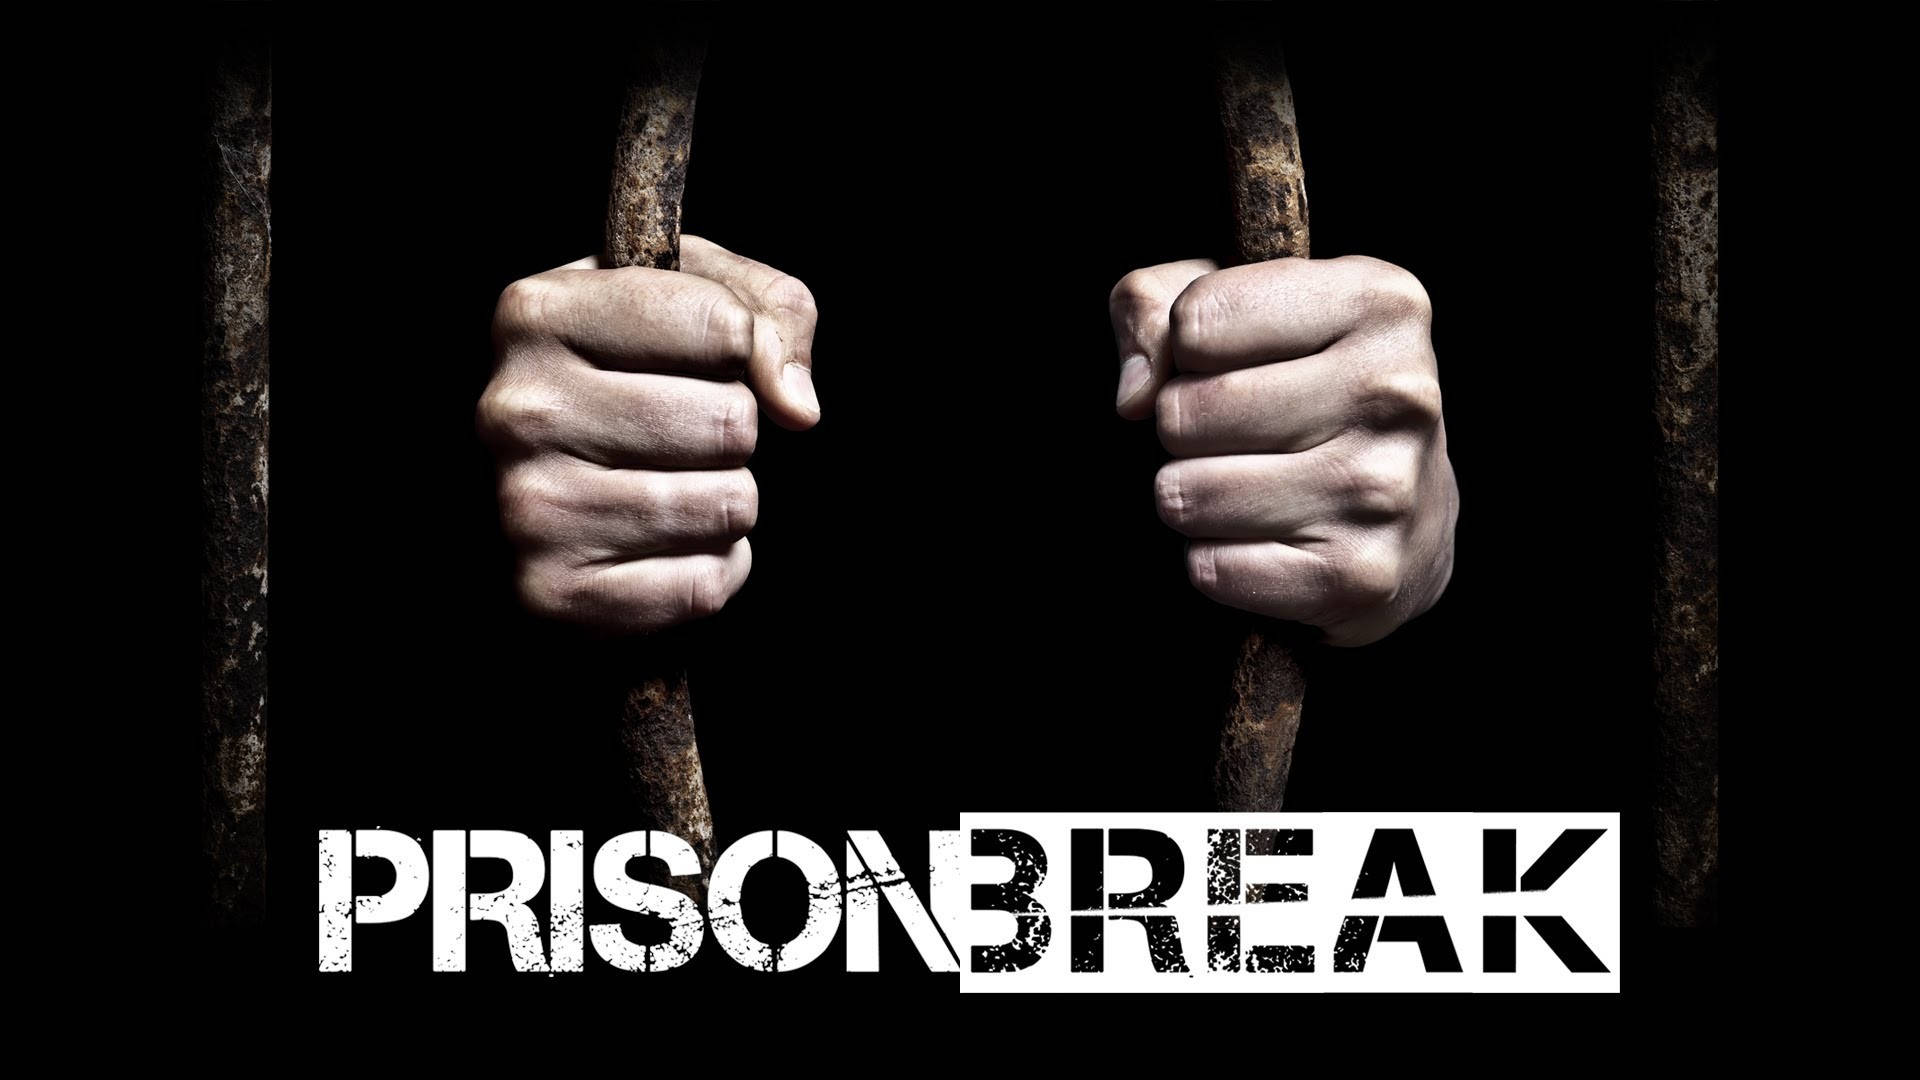 Prison Break Hand Behind Bars Cover